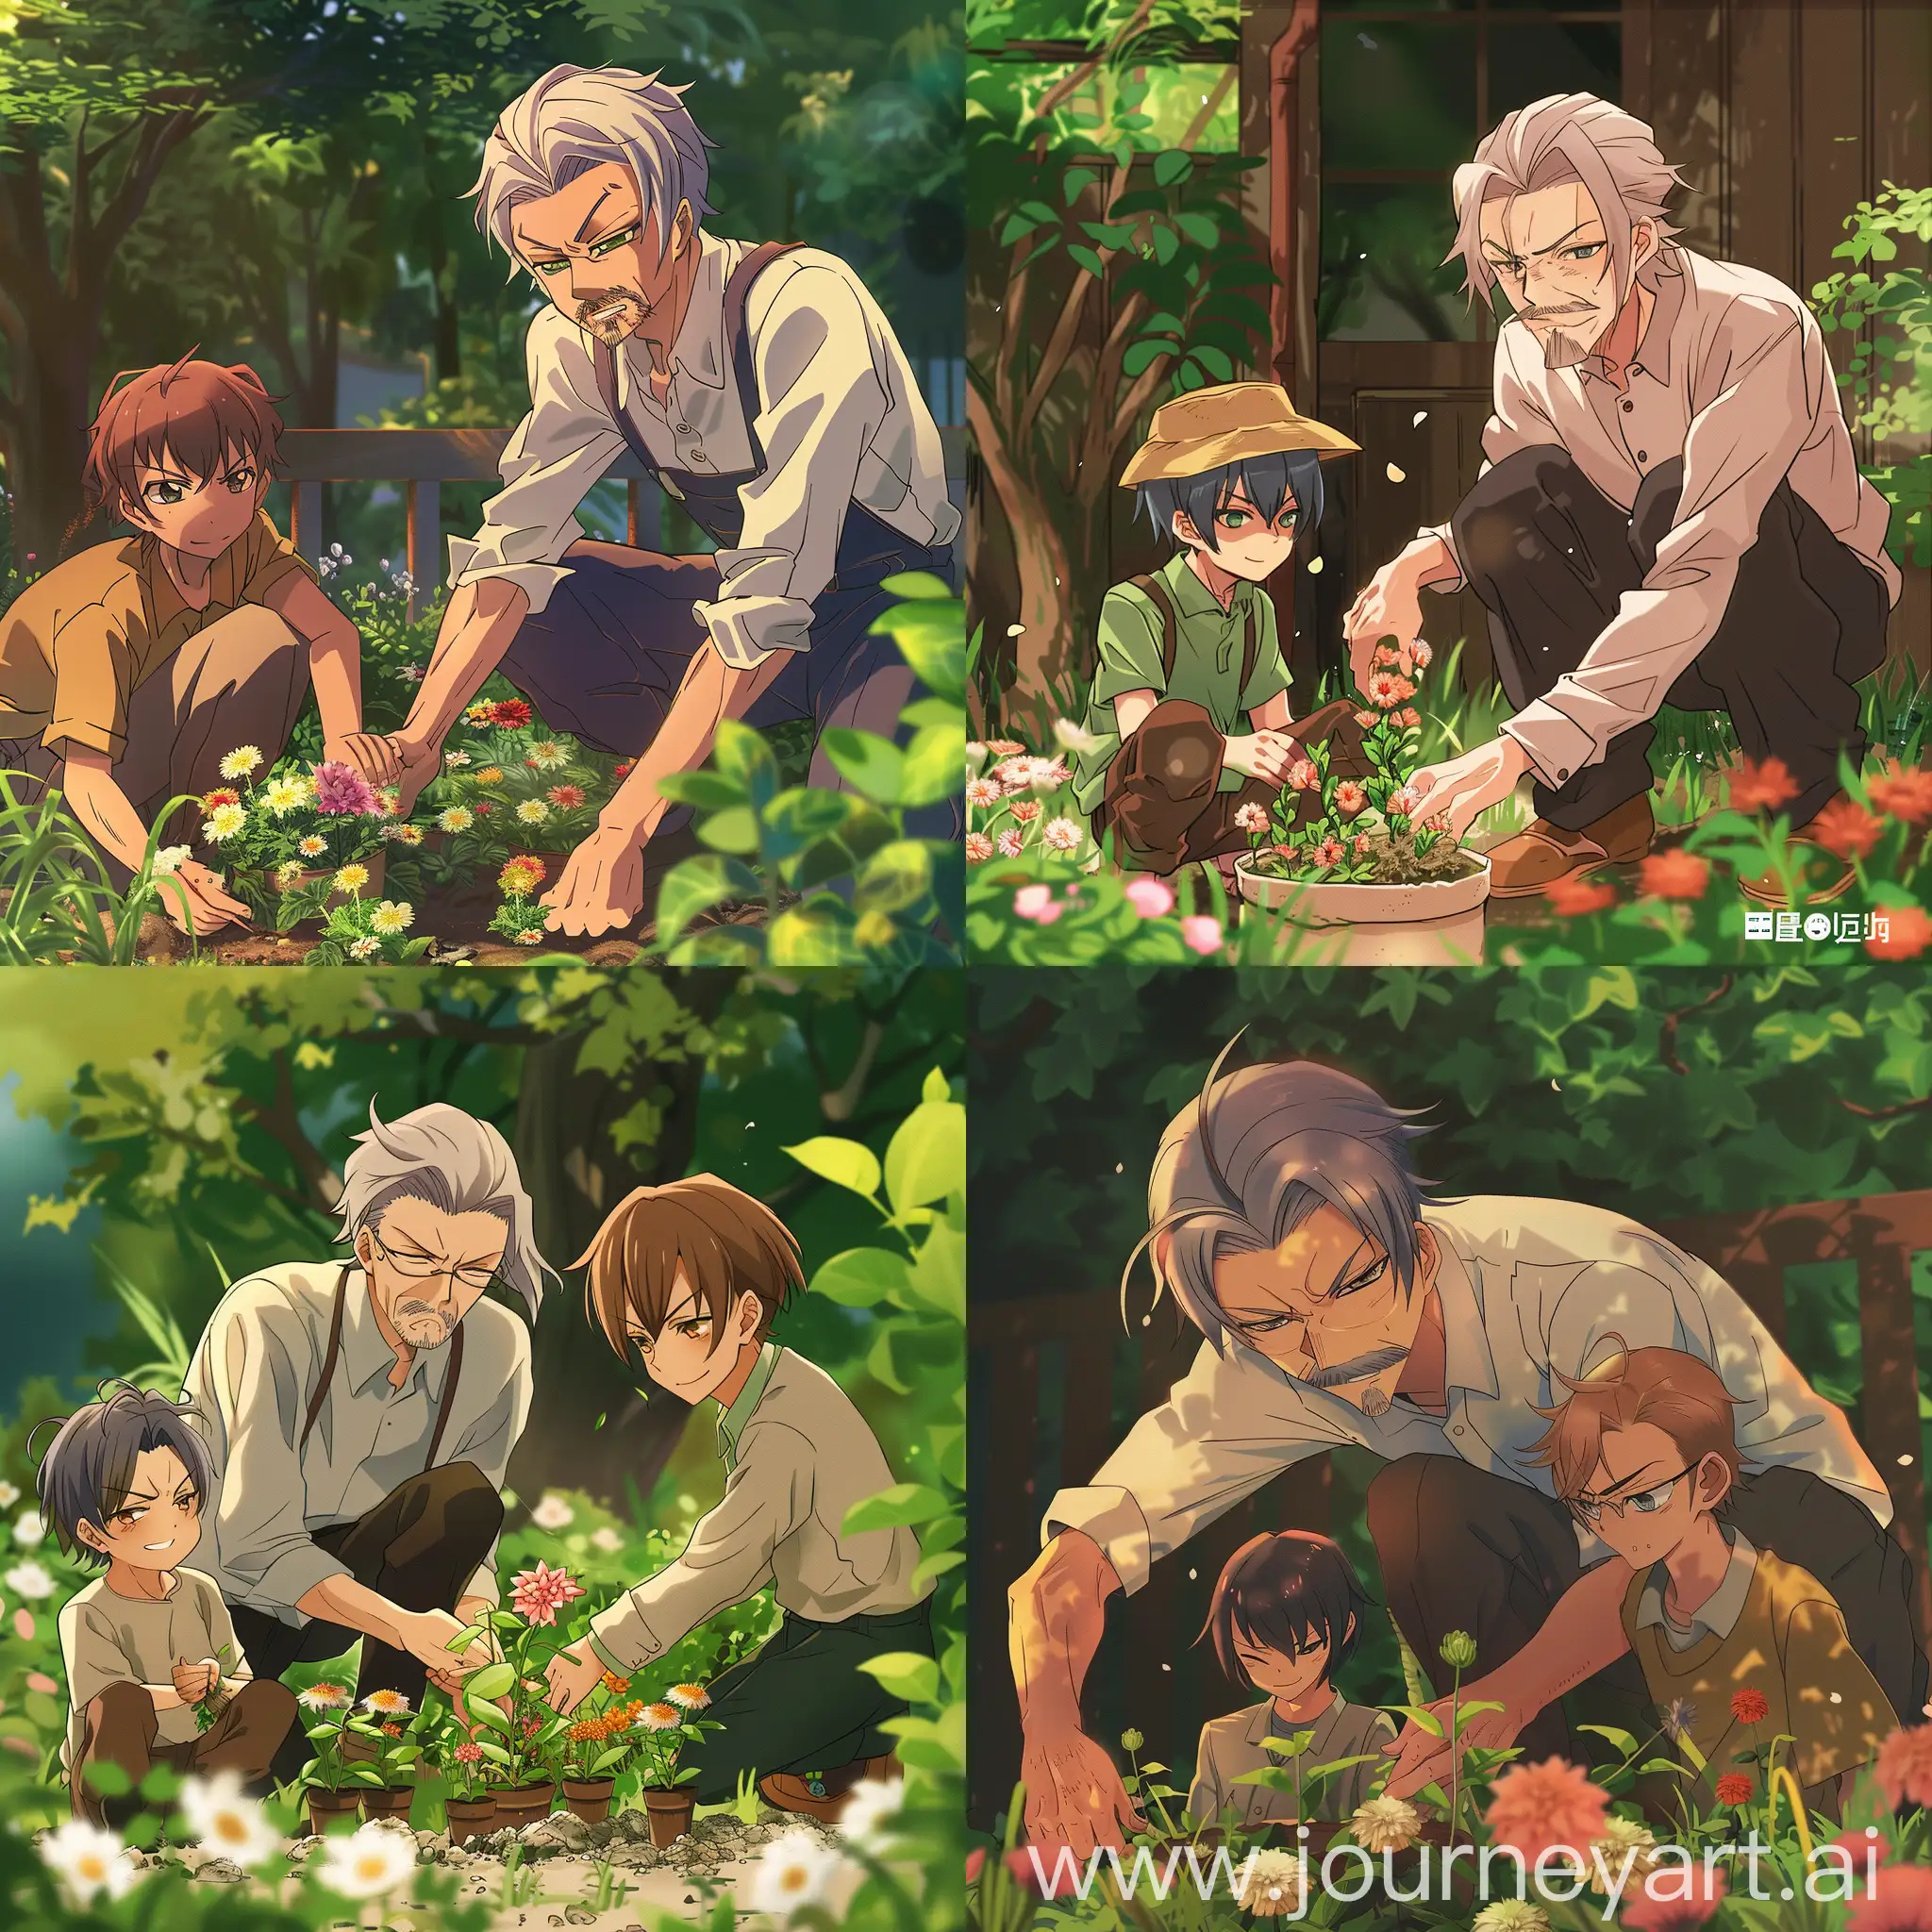 an old man and a boy planting flowers in the garden, anime style --cw 0 --cref https://i.pinimg.com/474x/fa/60/42/fa60421ba8feb0add413986374c84b44.jpg
https://letdream.ap-south-1.linodeobjects.com/opendream.ori/1104386577eda4c0f08_0.jpg